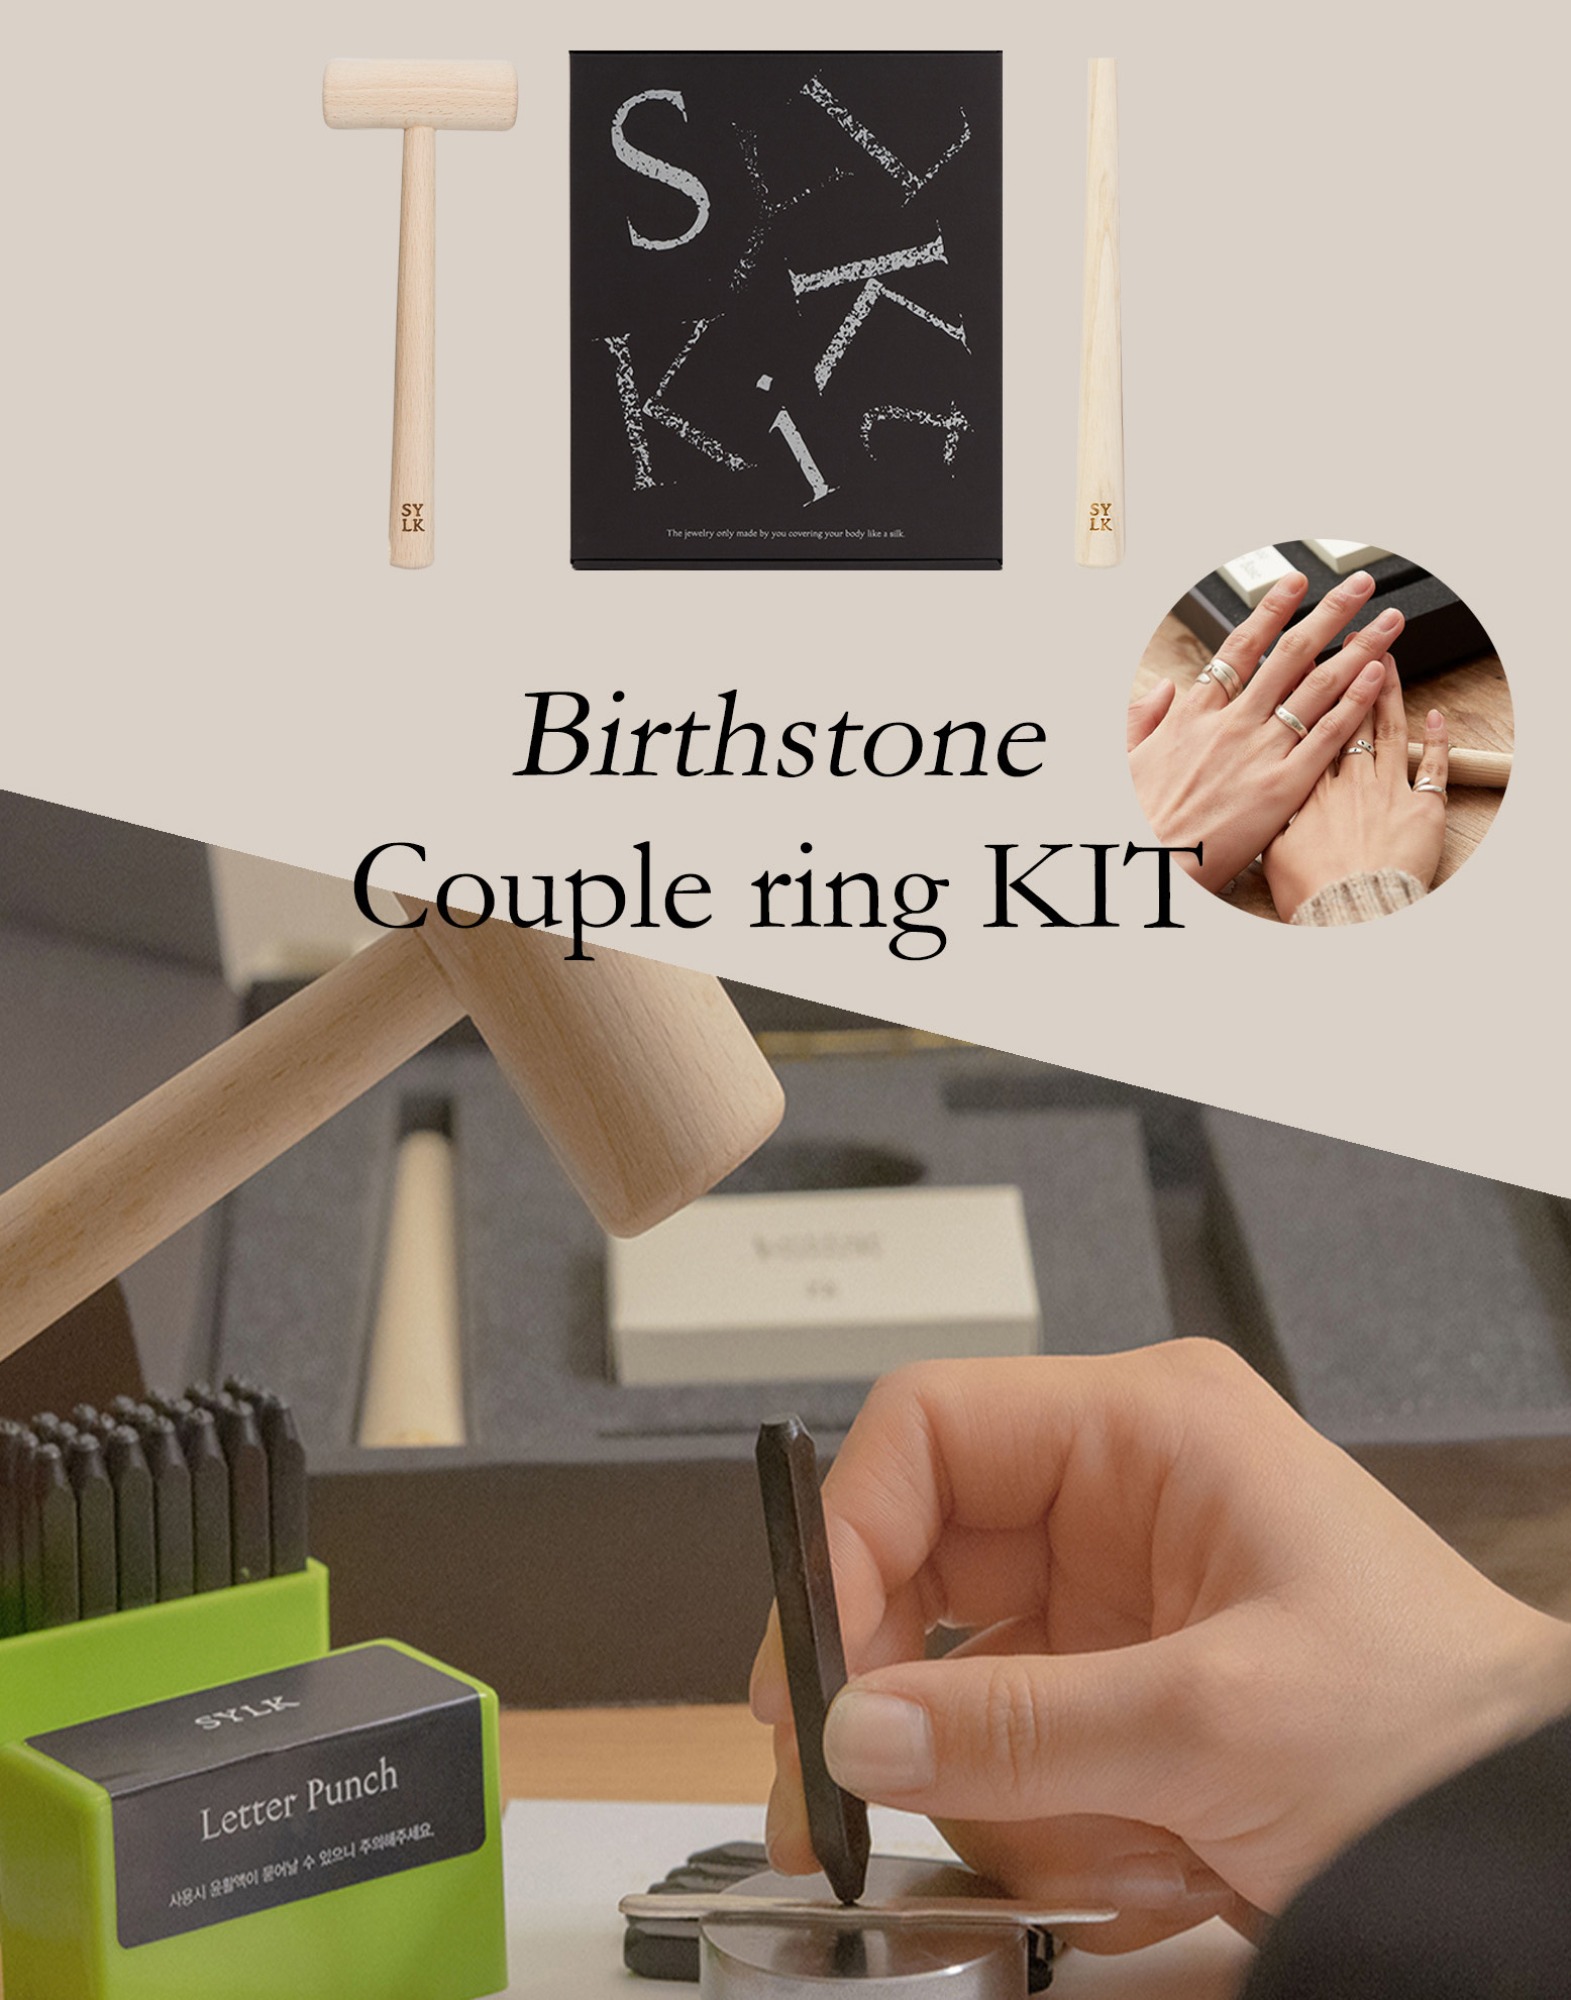 Birthstone couple ring kit